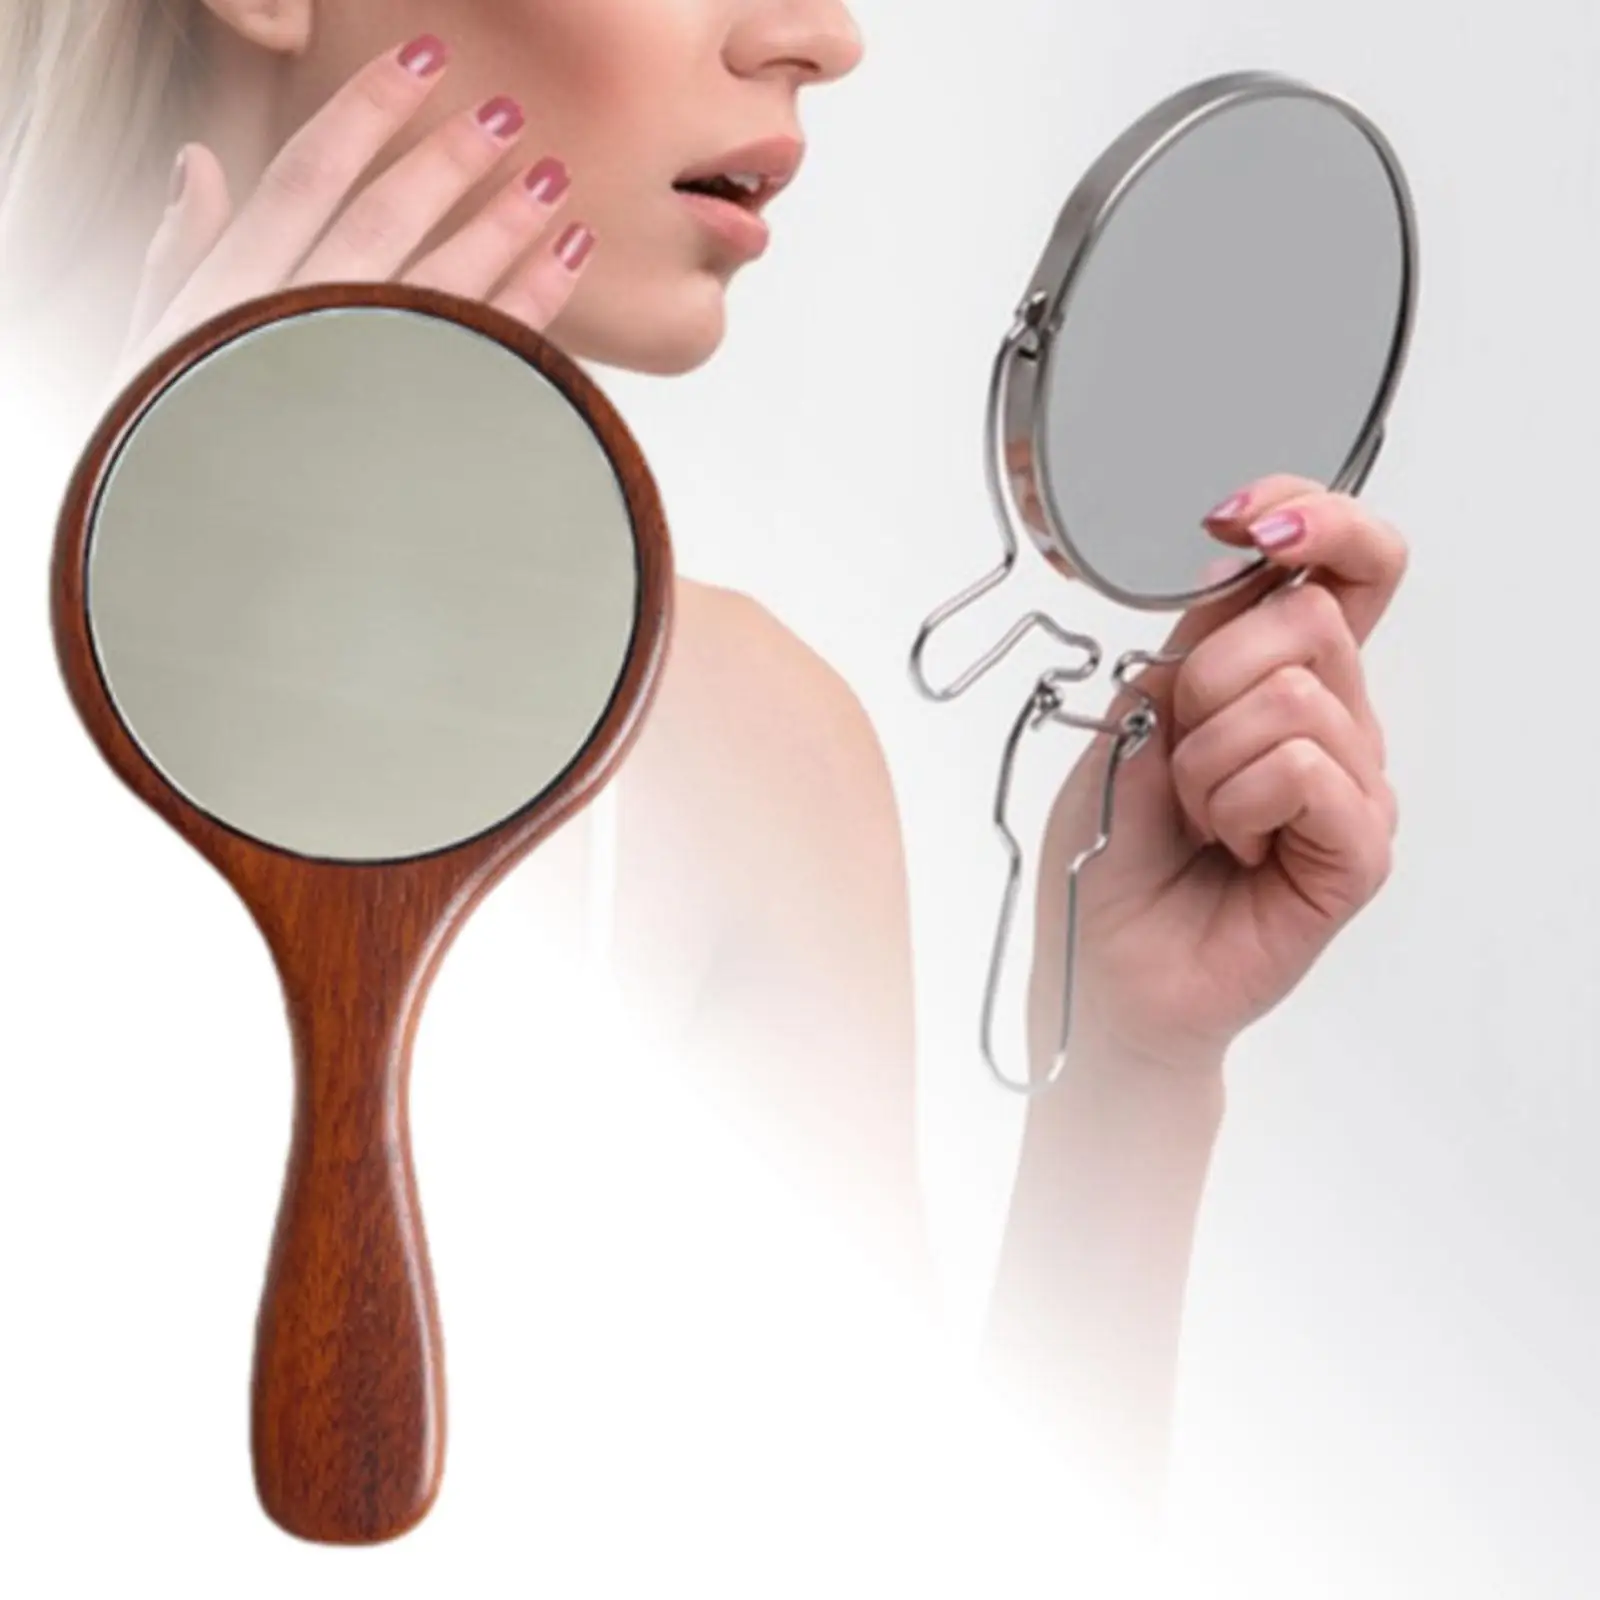 Small Makeup Mirror Wooden Decorative Salon Hairdresser Plain Mirror Handheld Mirror for Dressing Table Barbers Desk Bedroom